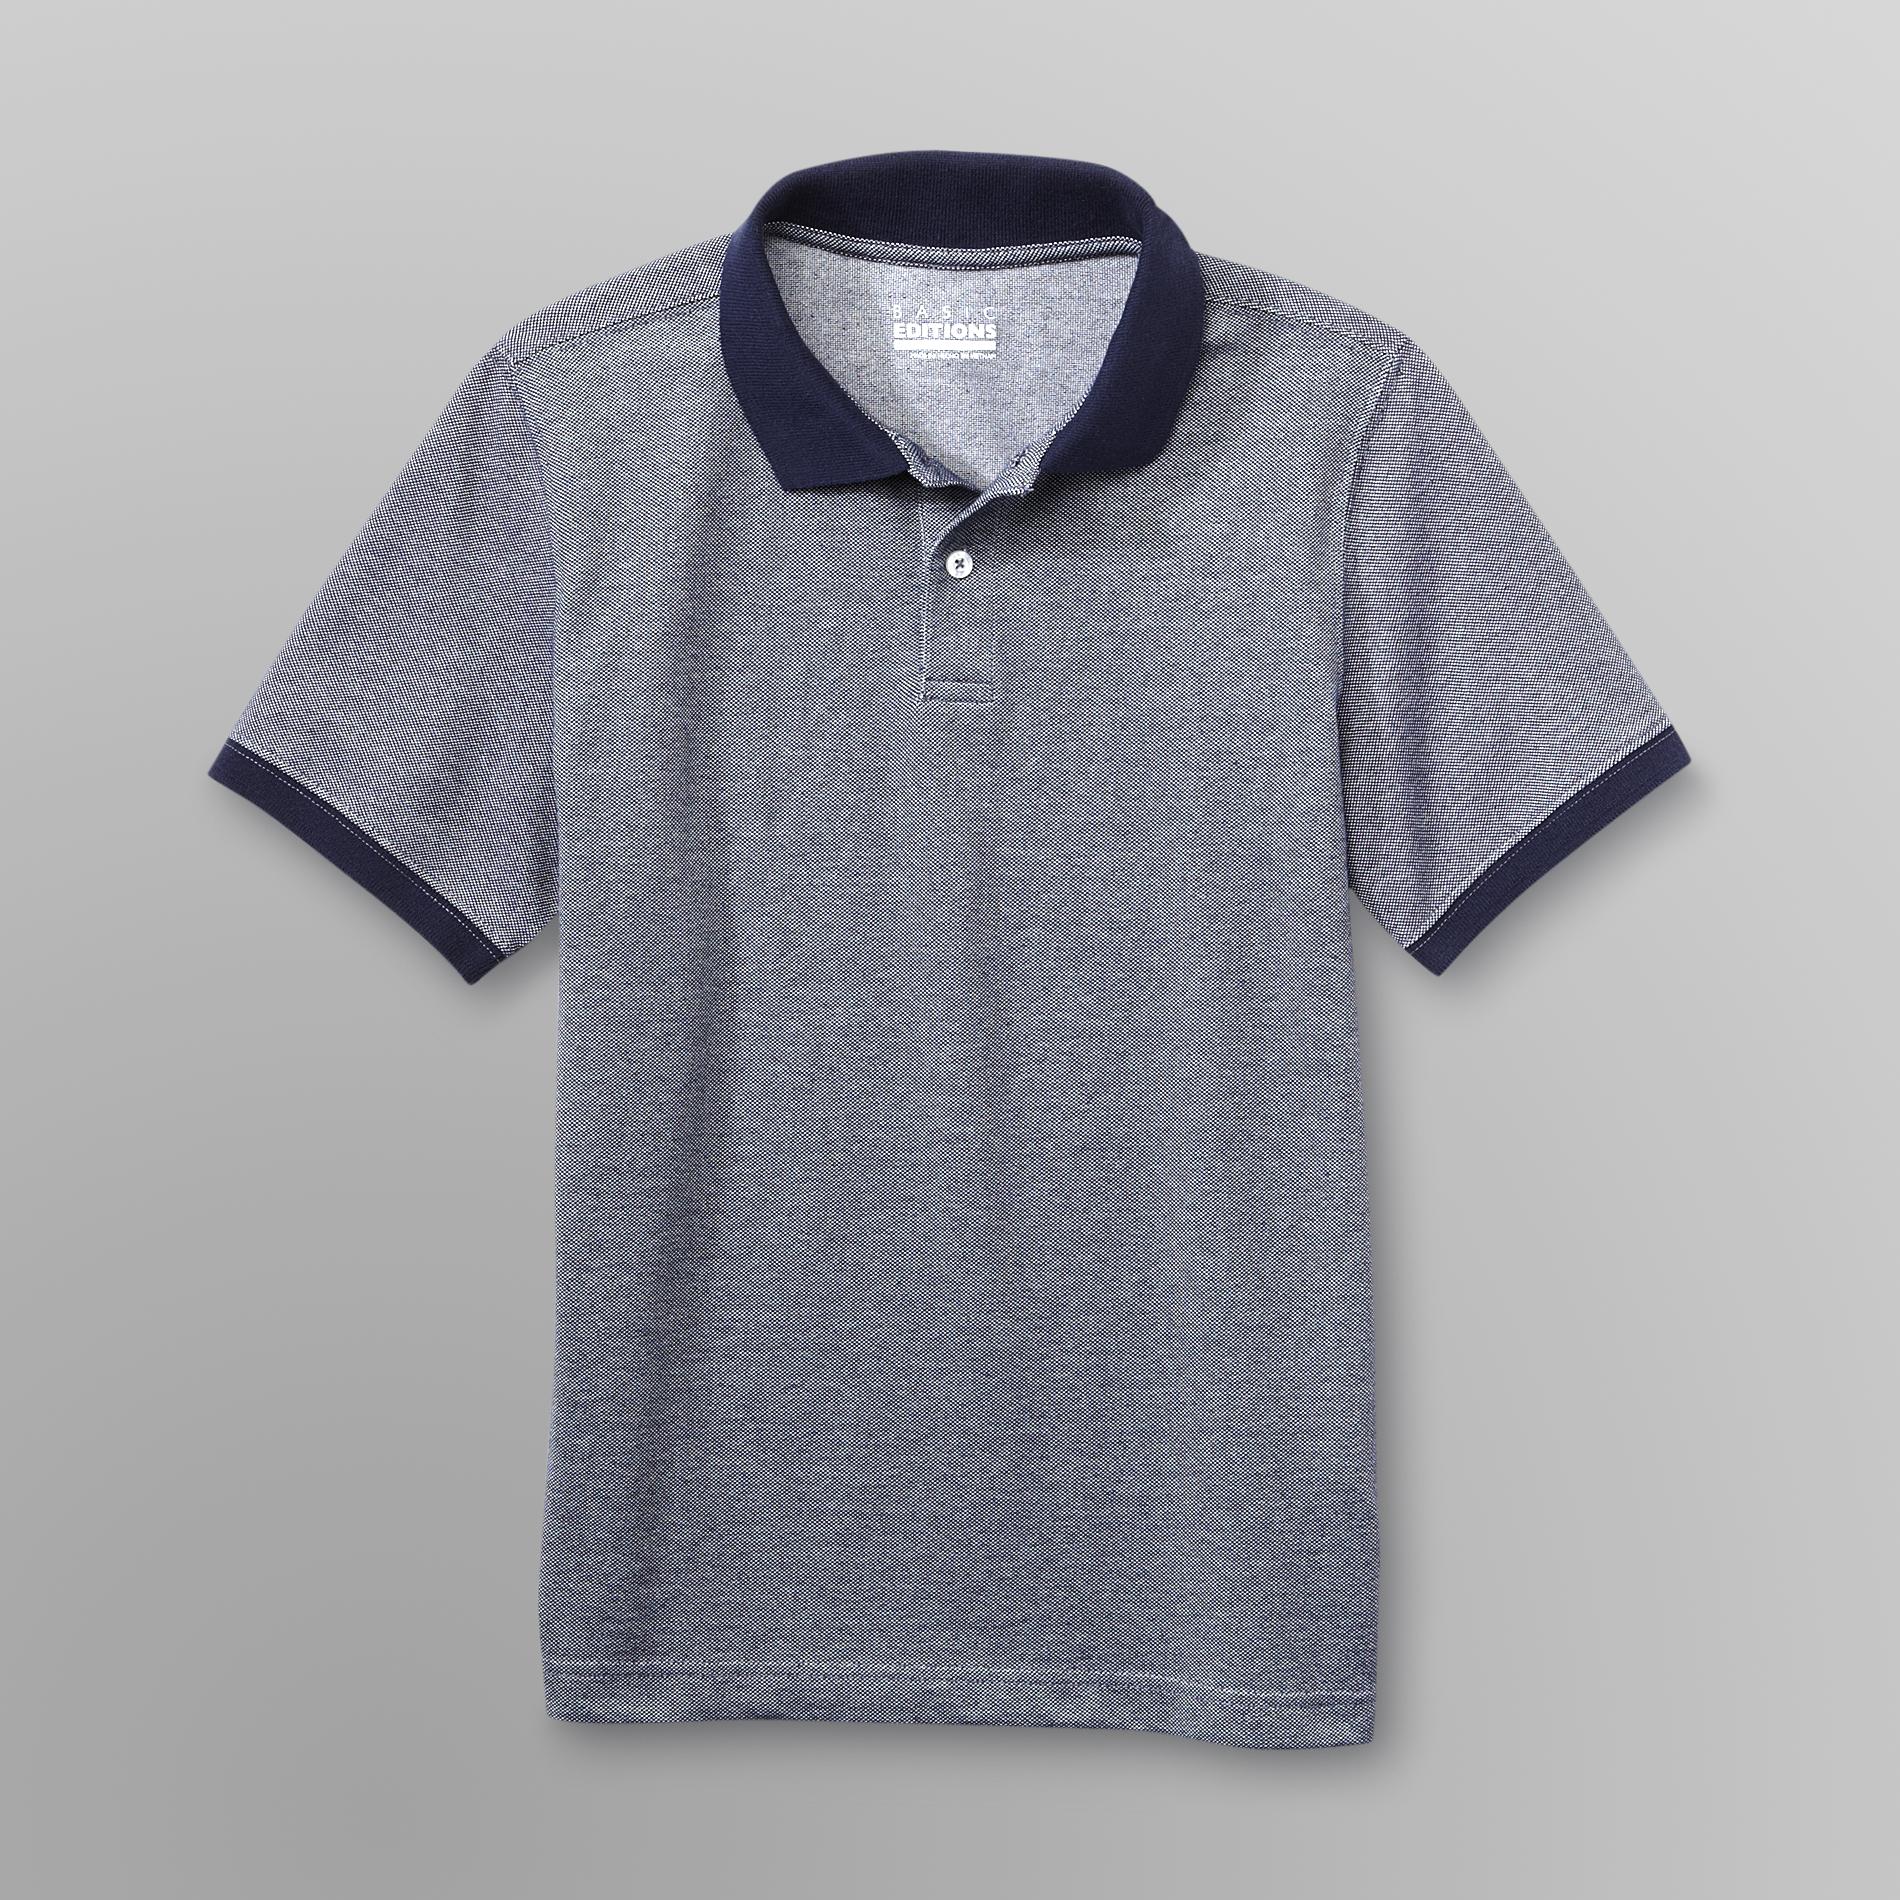 Basic Editions Boy's Polo Shirt - Heathered